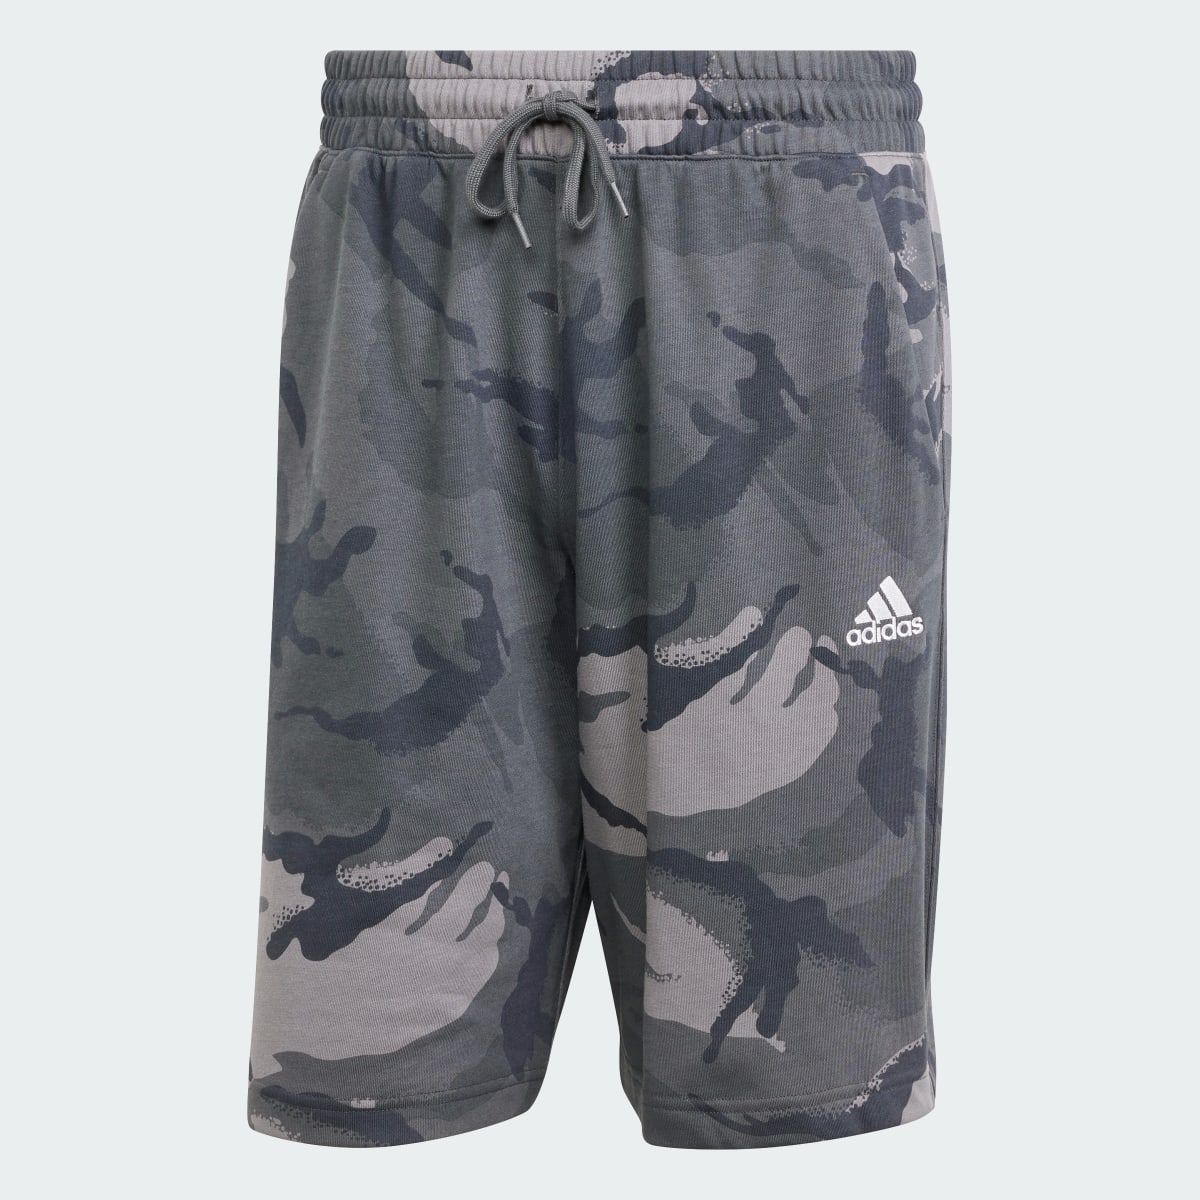 Adidas Shorts Seasonal Essentials Camouflage. 5